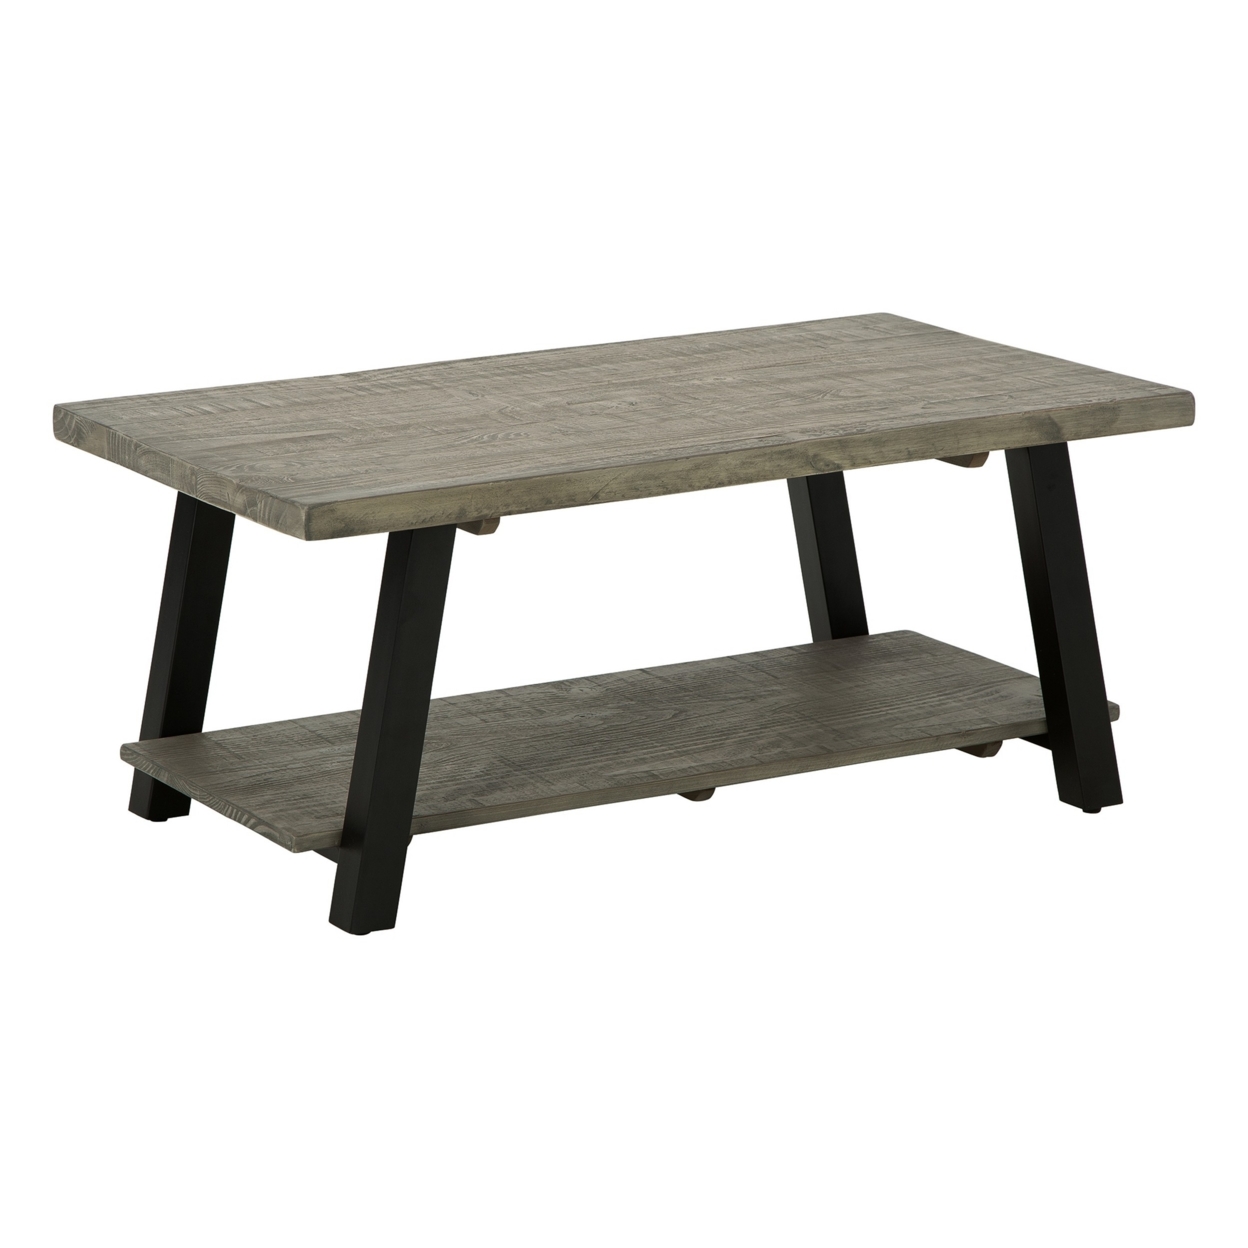 Modern 42 Inch Coffee Table, Solid Pine Wood Top, Metal Base, Muted Gray- Saltoro Sherpi